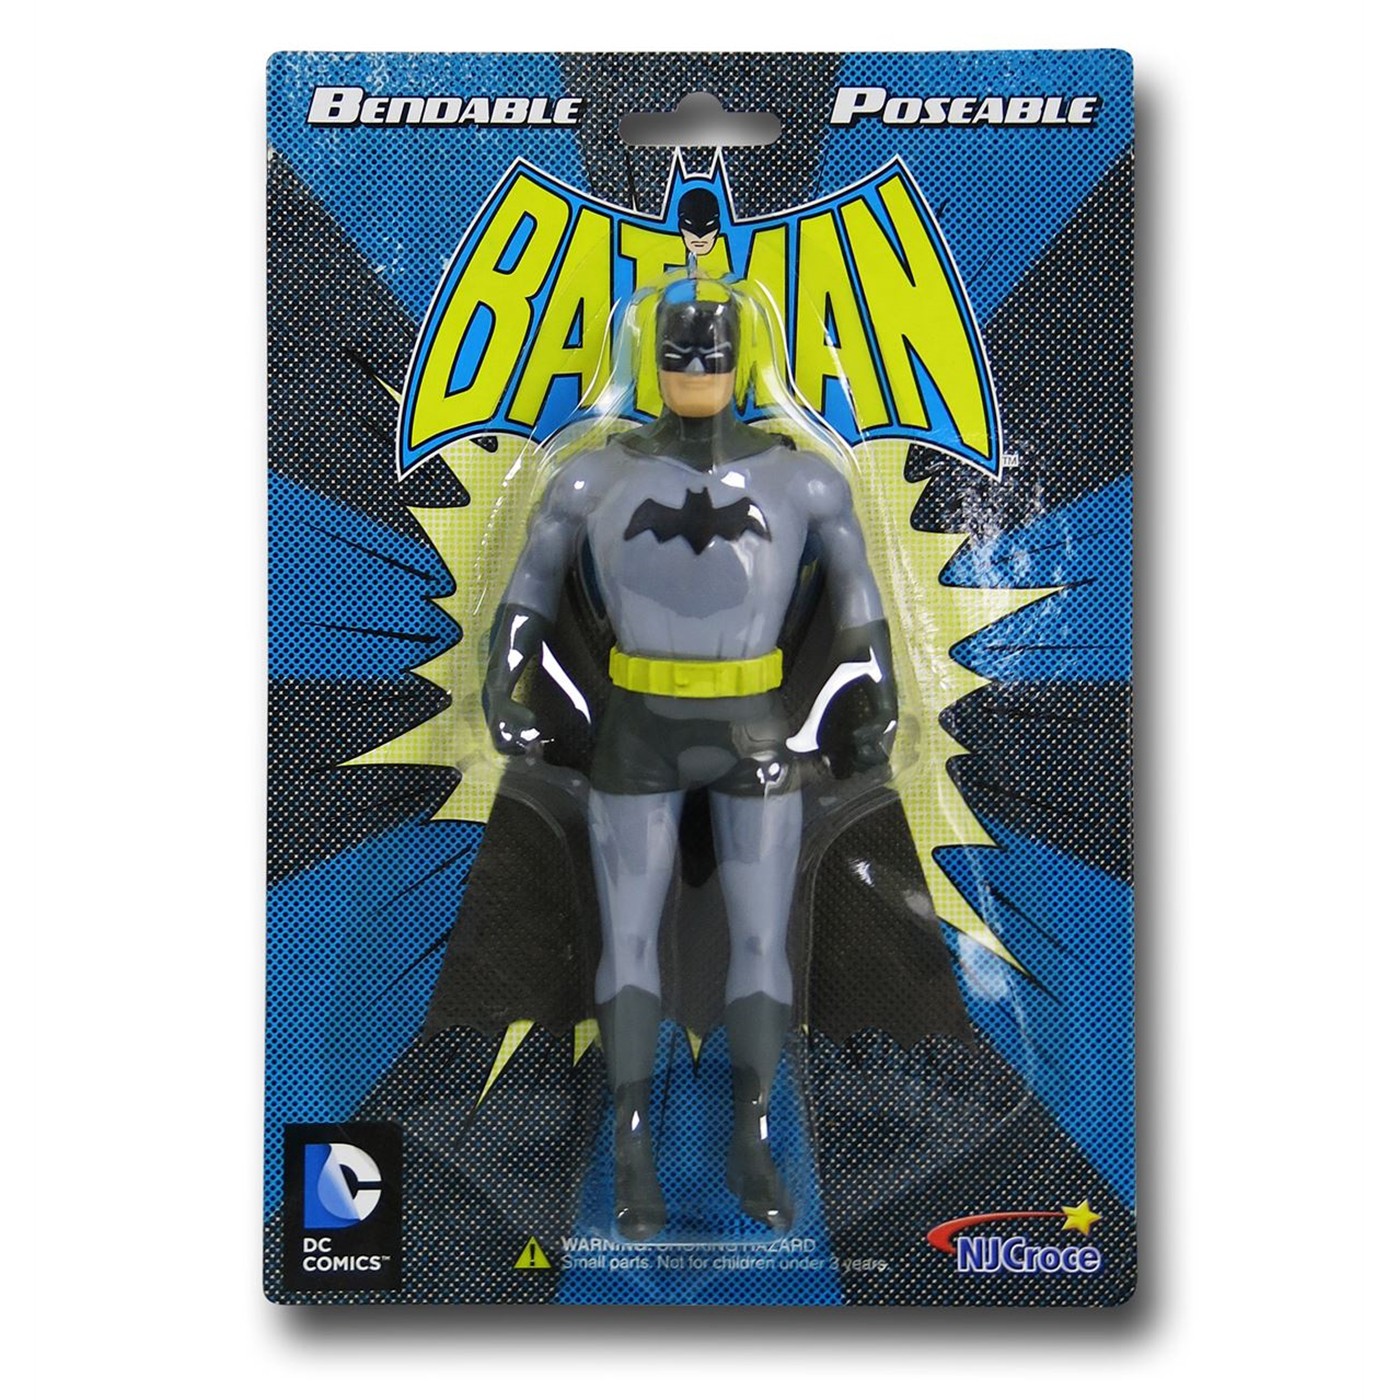 Batman Classic Bendable and Posable Action Figure